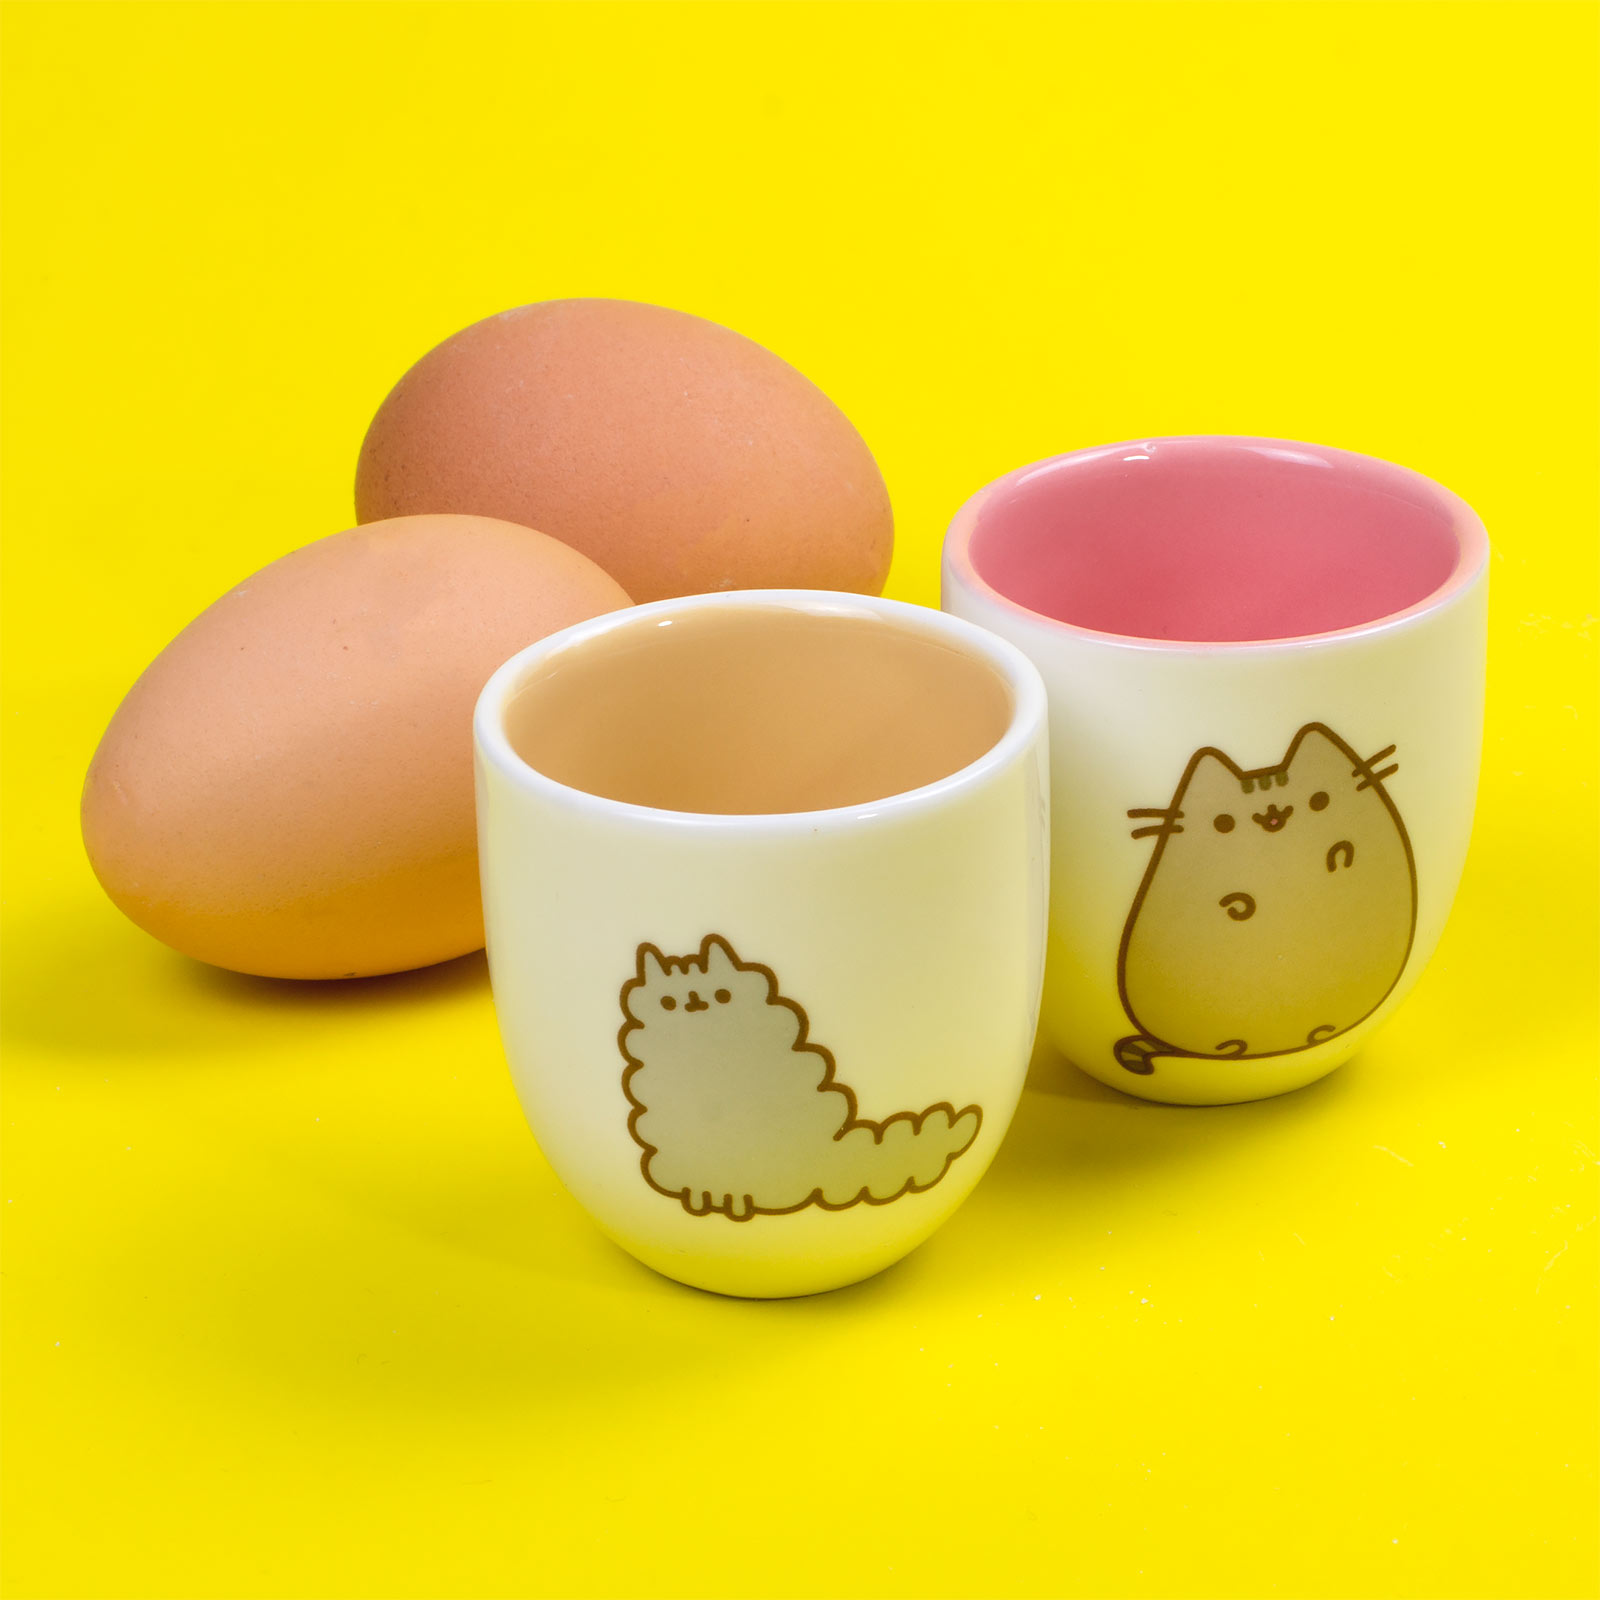 Pusheen & Stormy Egg Cups 2-piece set